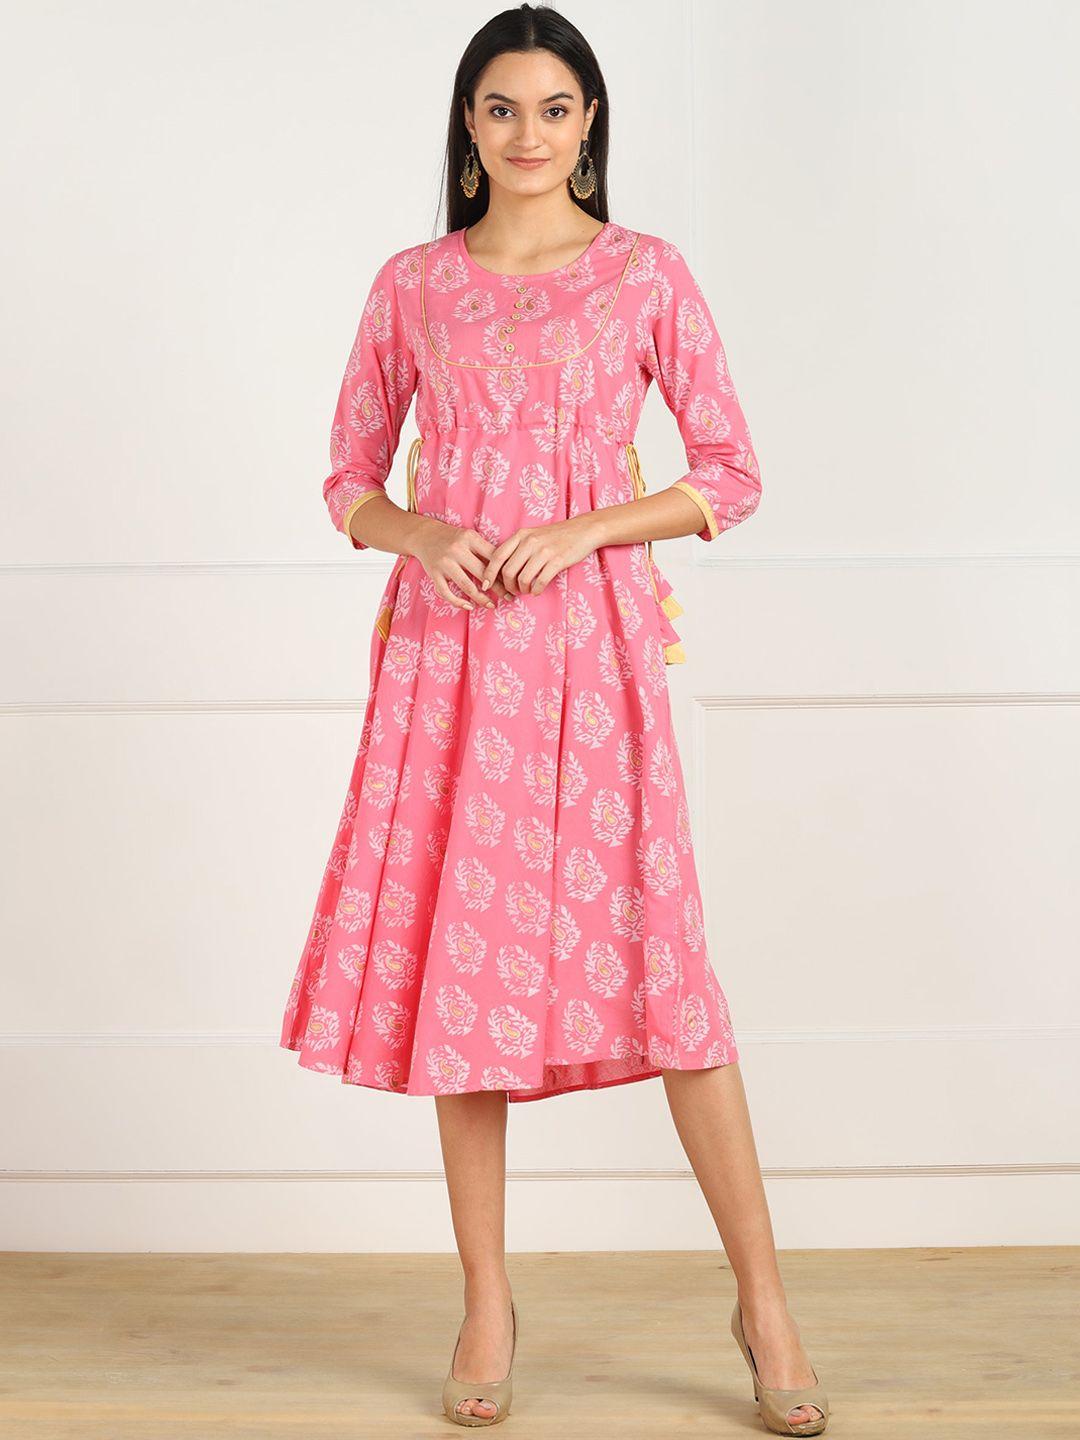 znx clothing women pink floral a-line midi dress